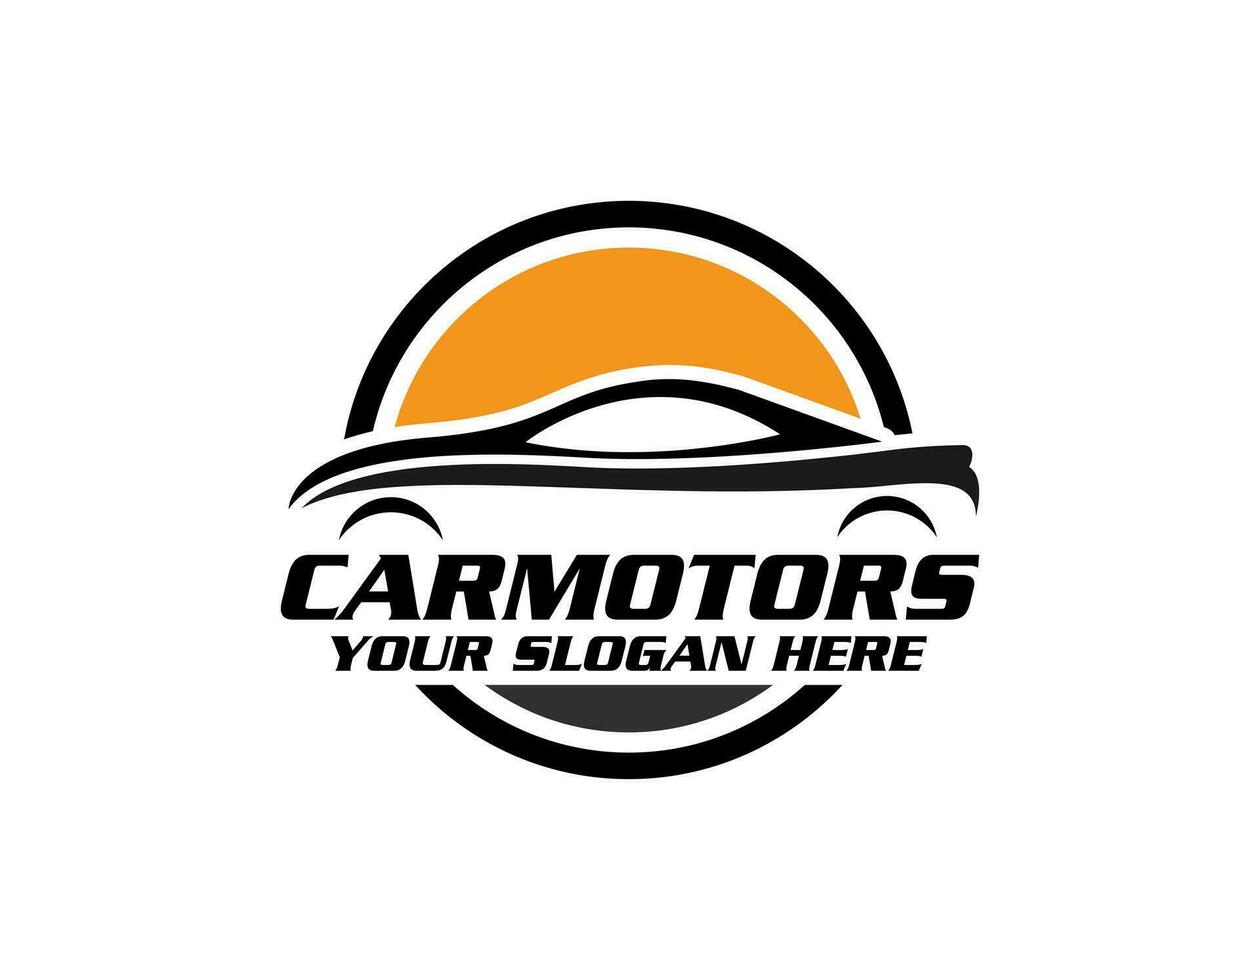 Fast Car Automotive Logo Design Template. Electric car logo vector